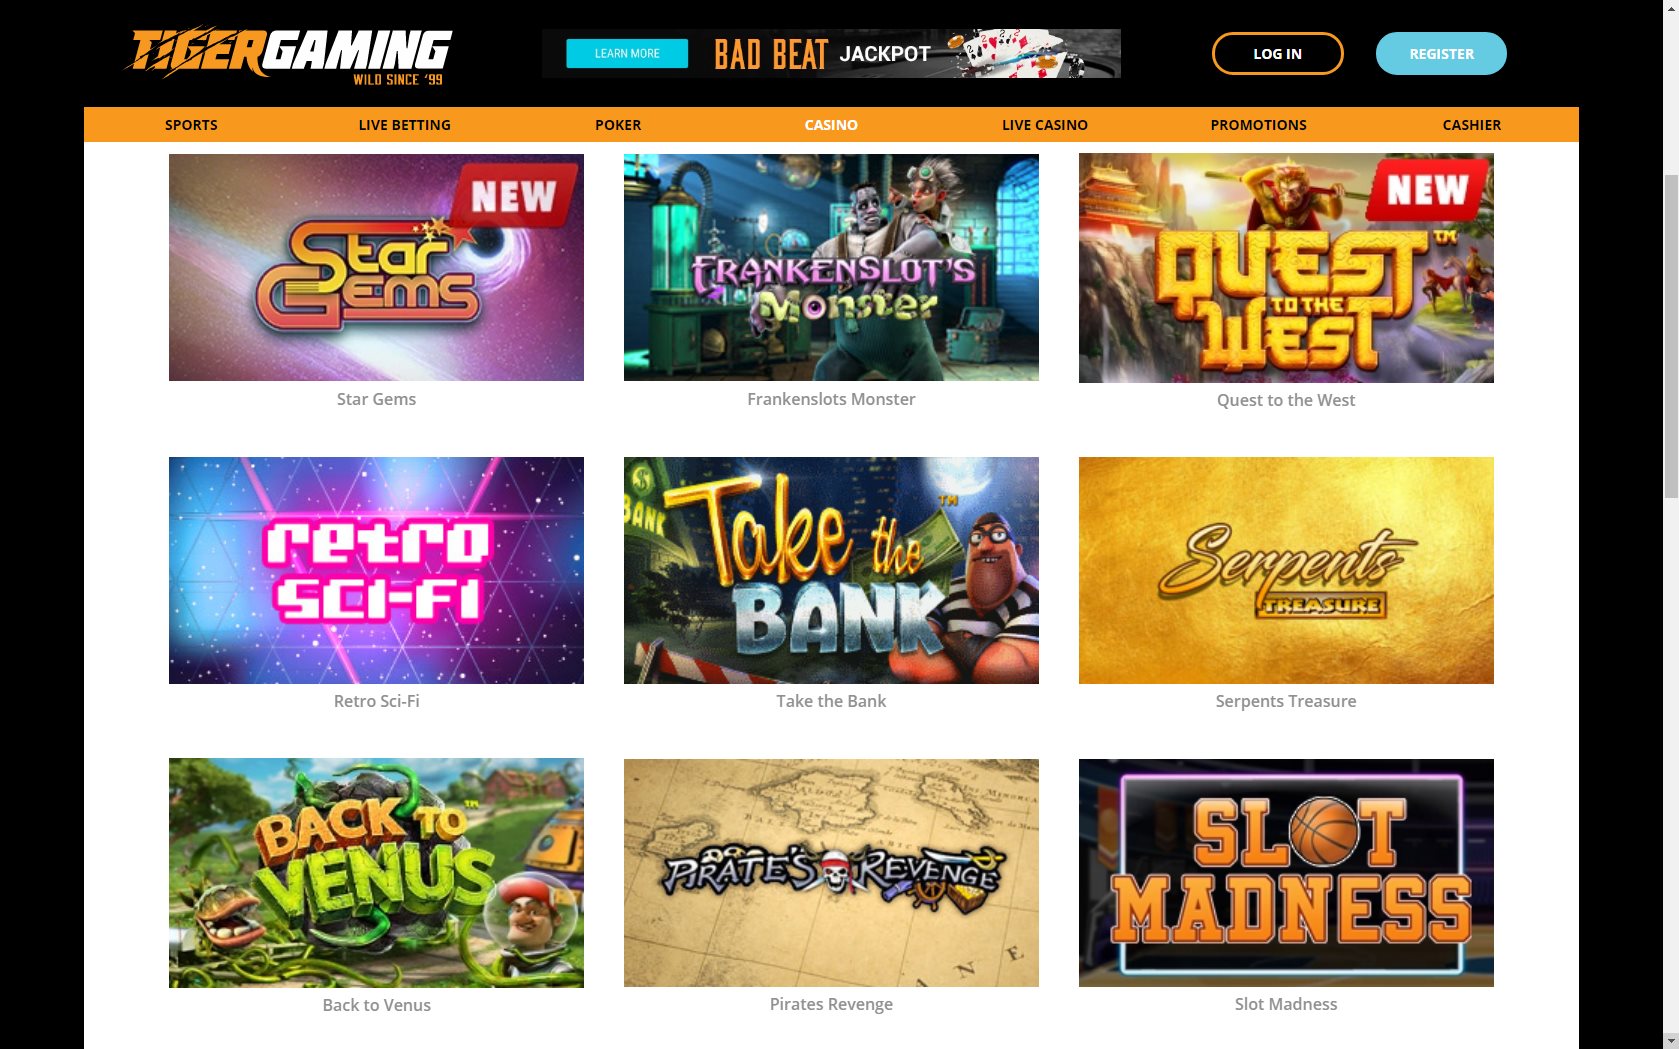 TigerGaming Casino Games